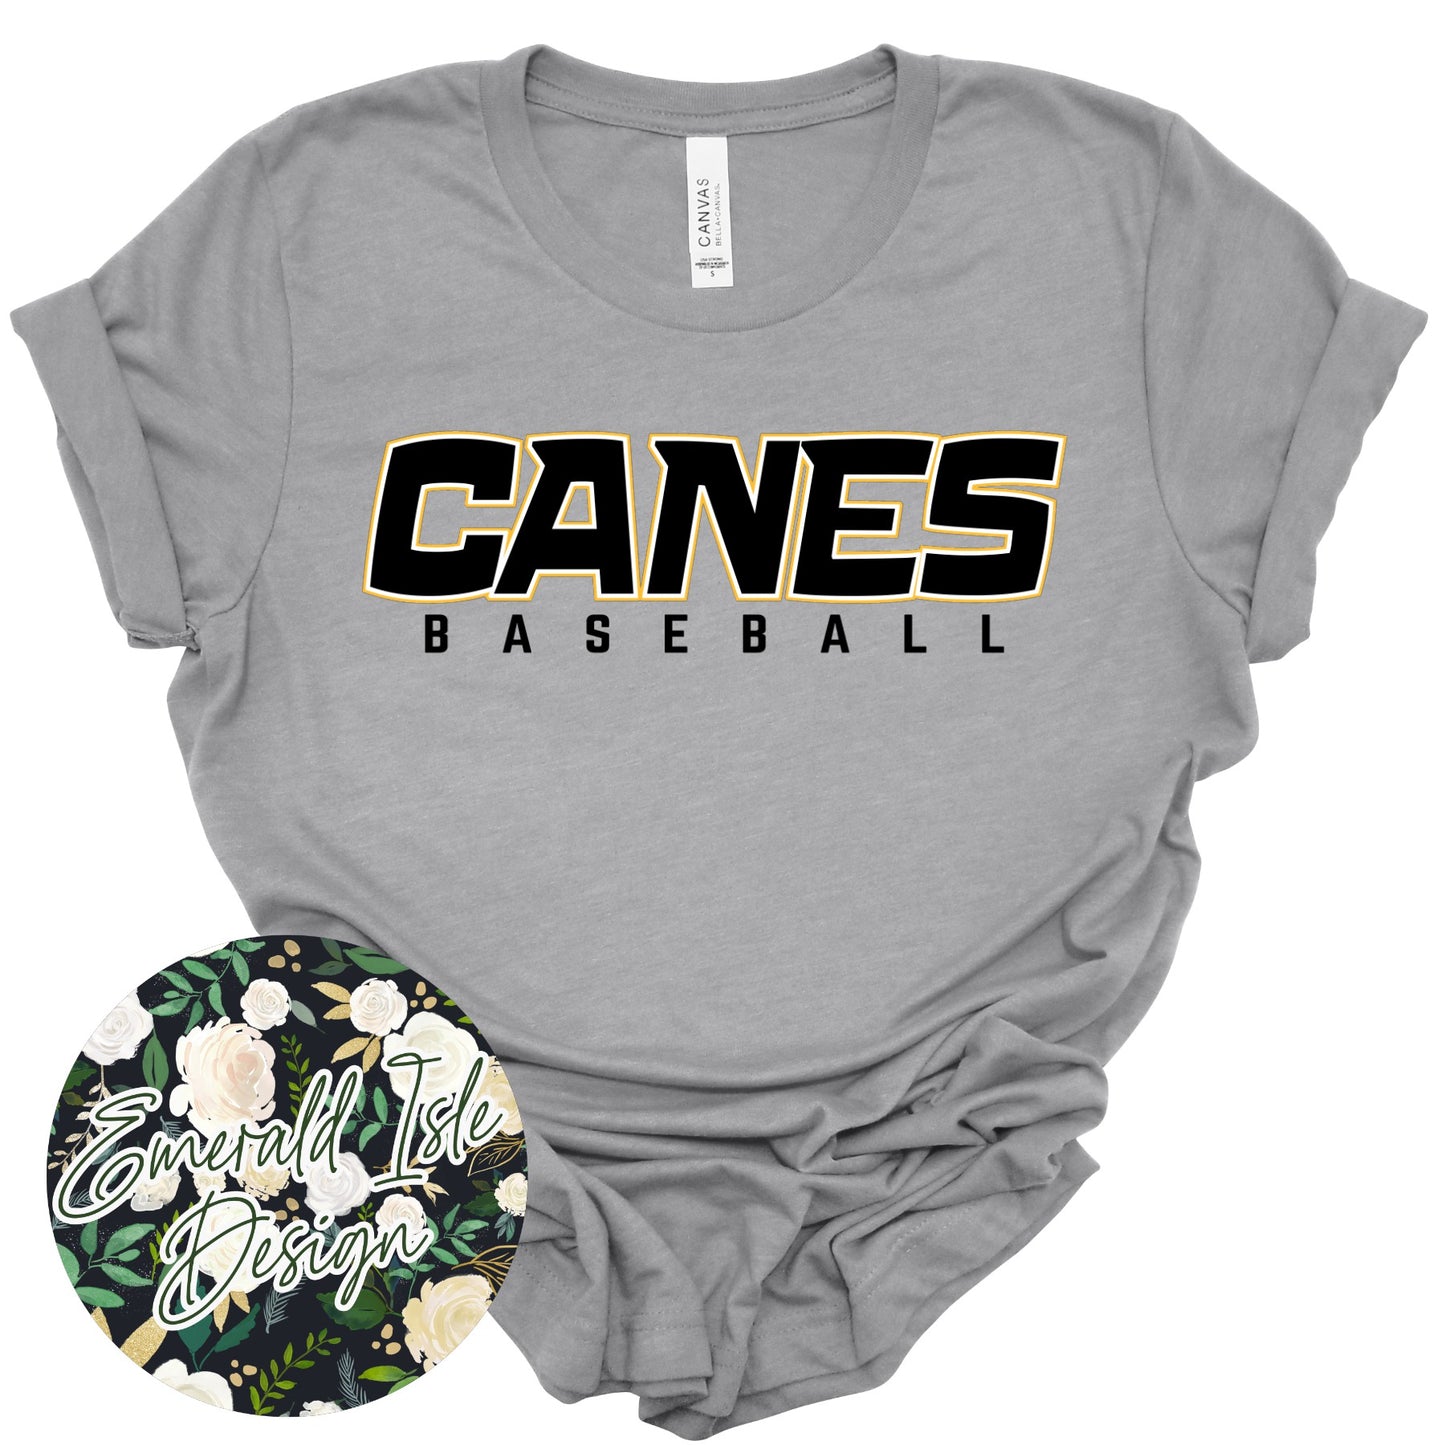 Canes Baseball Design